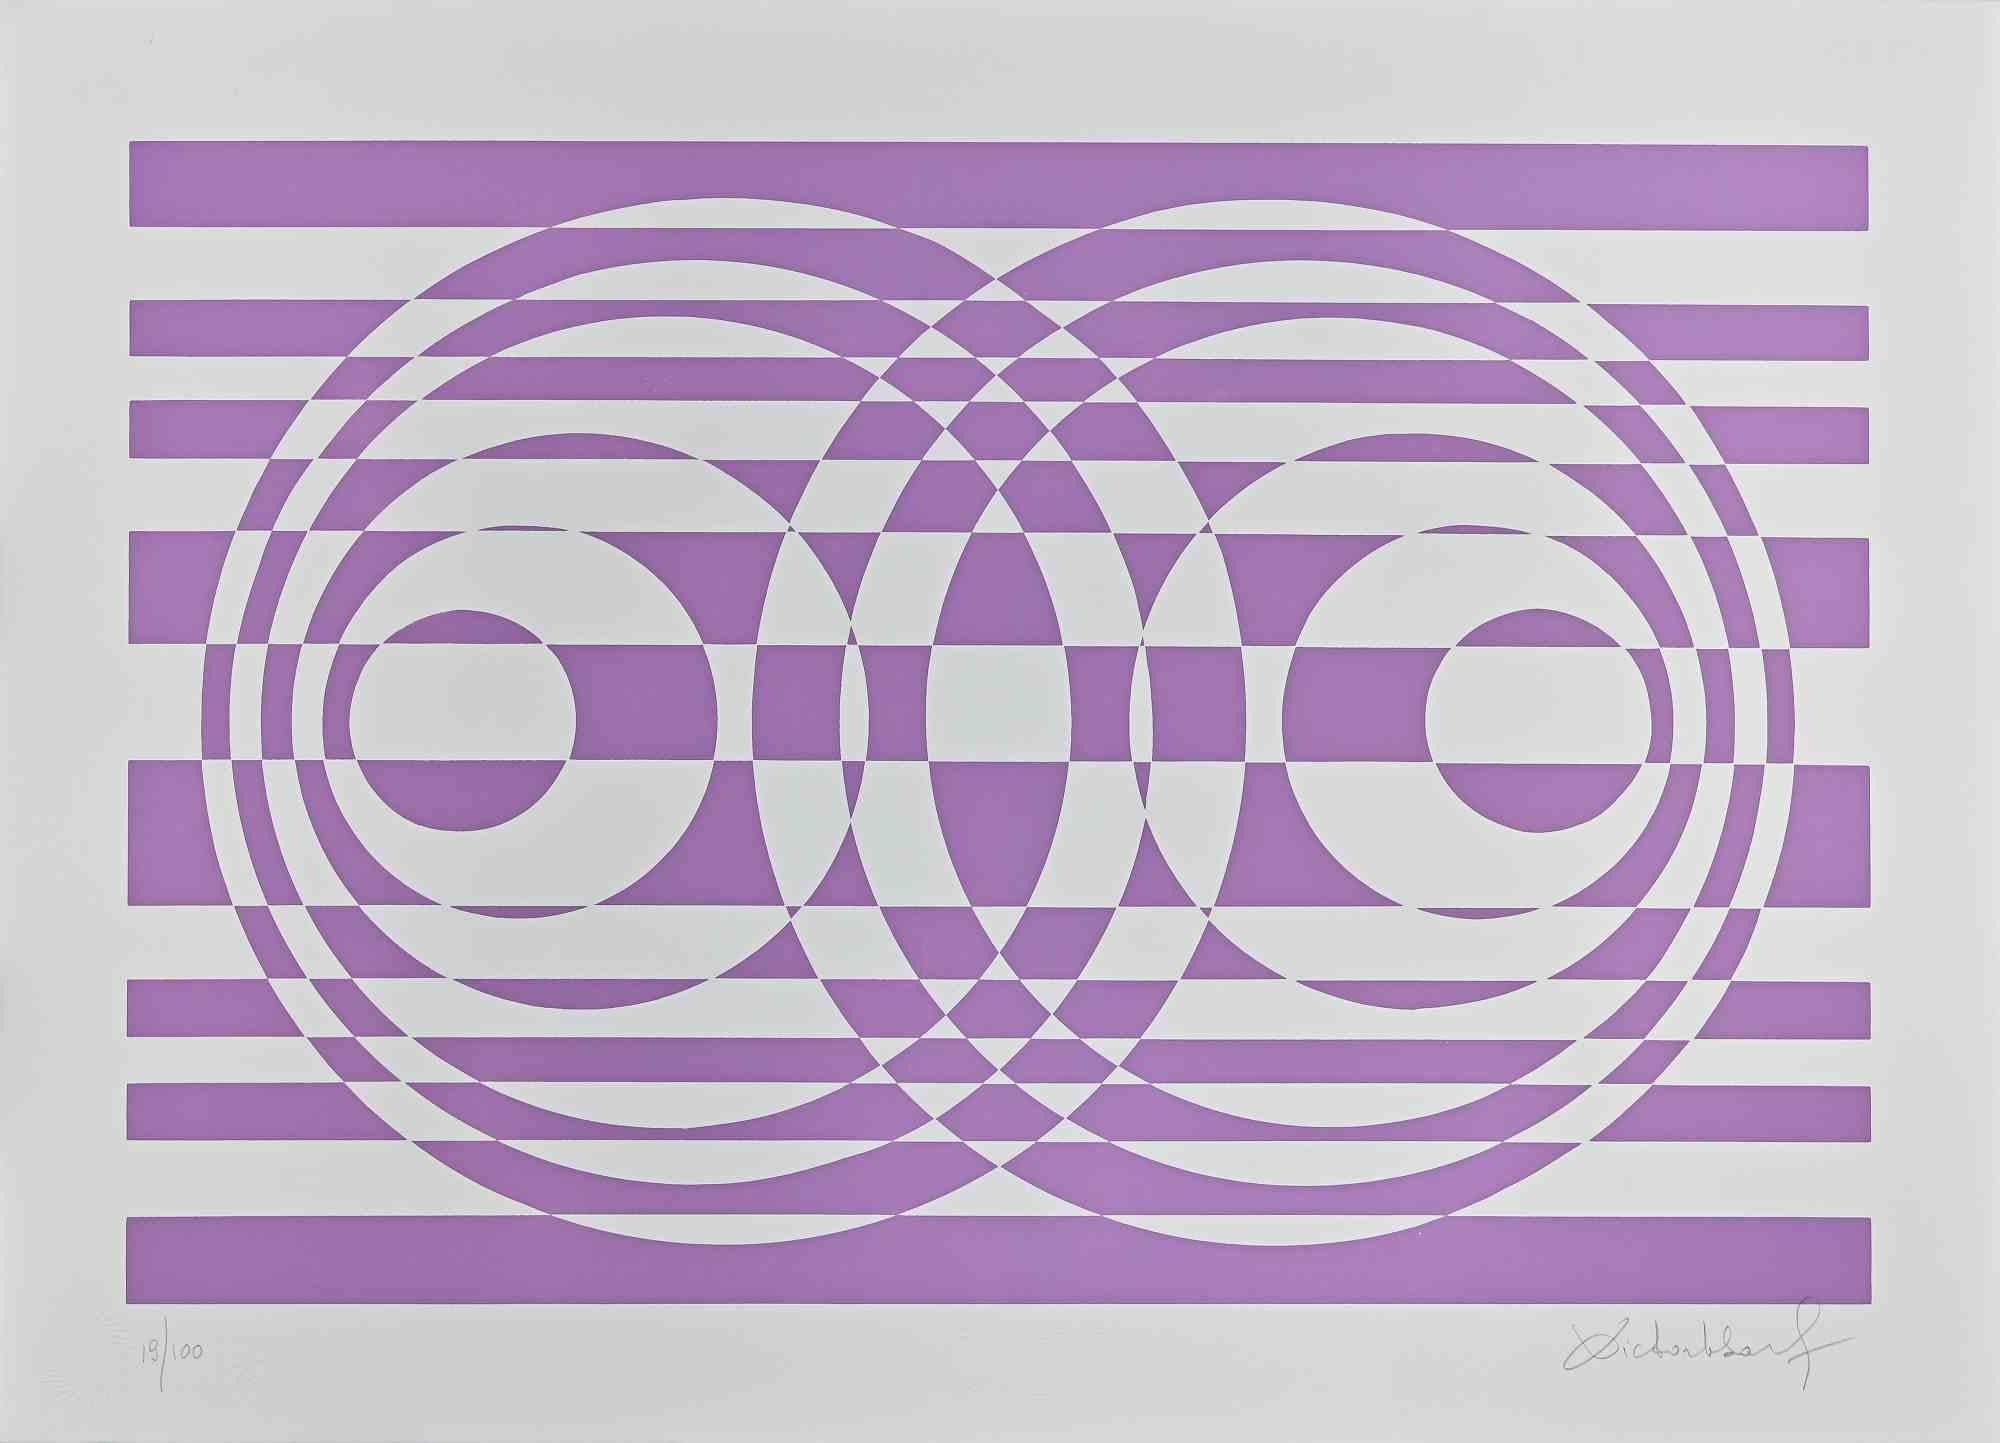 Abstract Print Victor Debach - Composition abstraite violette - Impression sérigraphiée de V. Debach - 1970